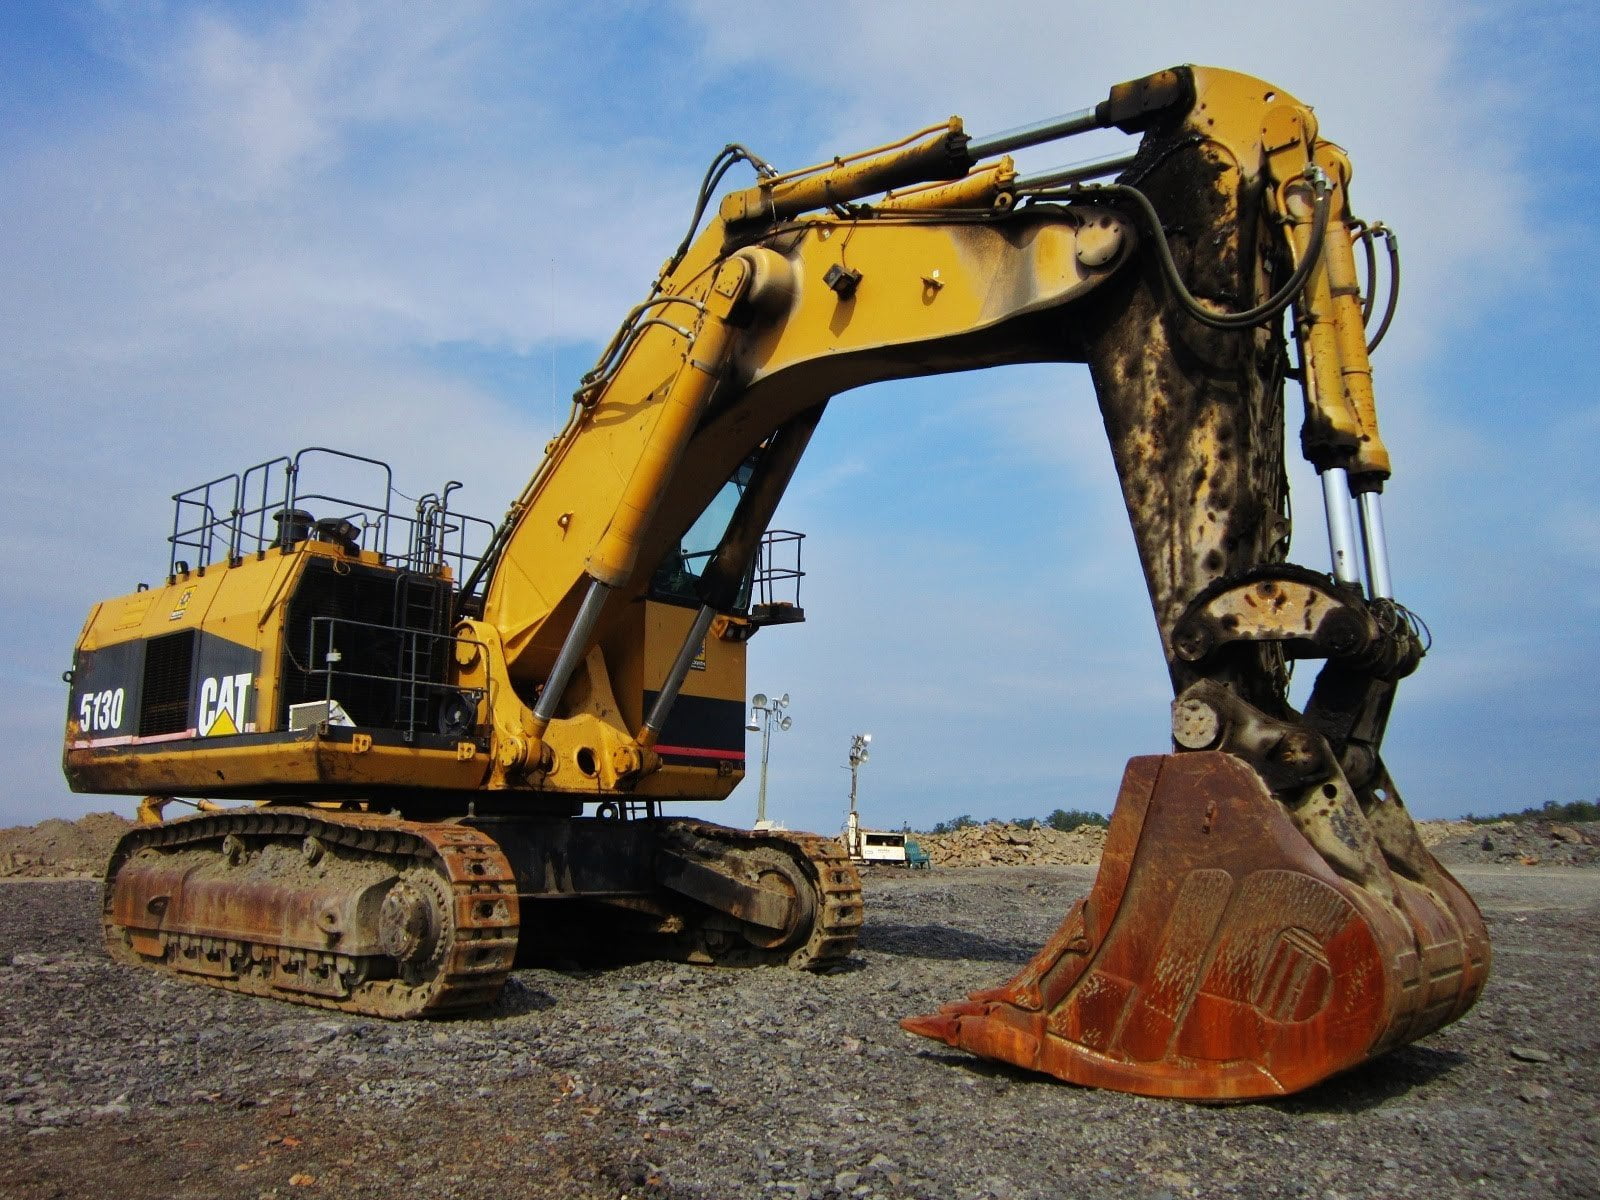 Mining excavator Caterpillar 5130 ec678410 3a5a 4b69 b1b7 45b554e28c48